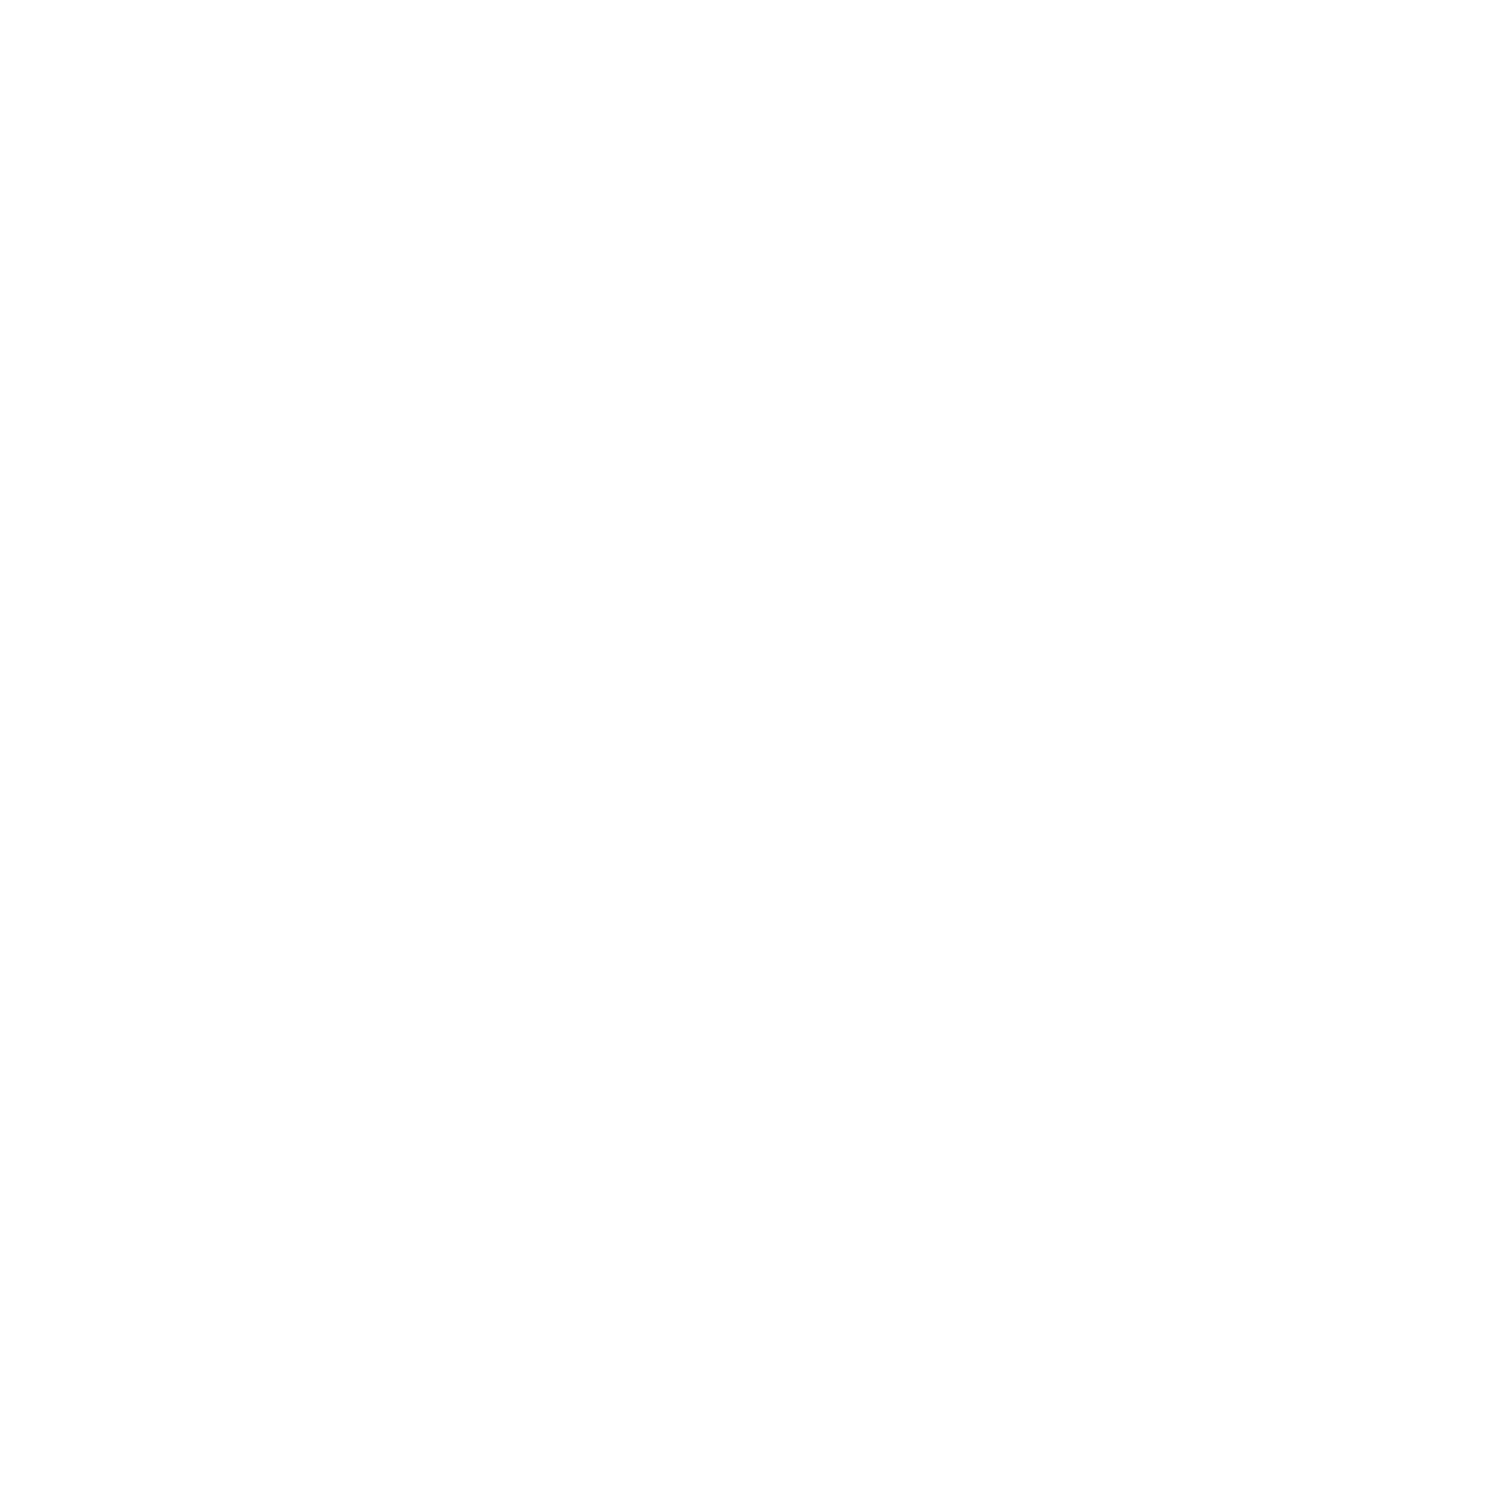 A white fingerprint